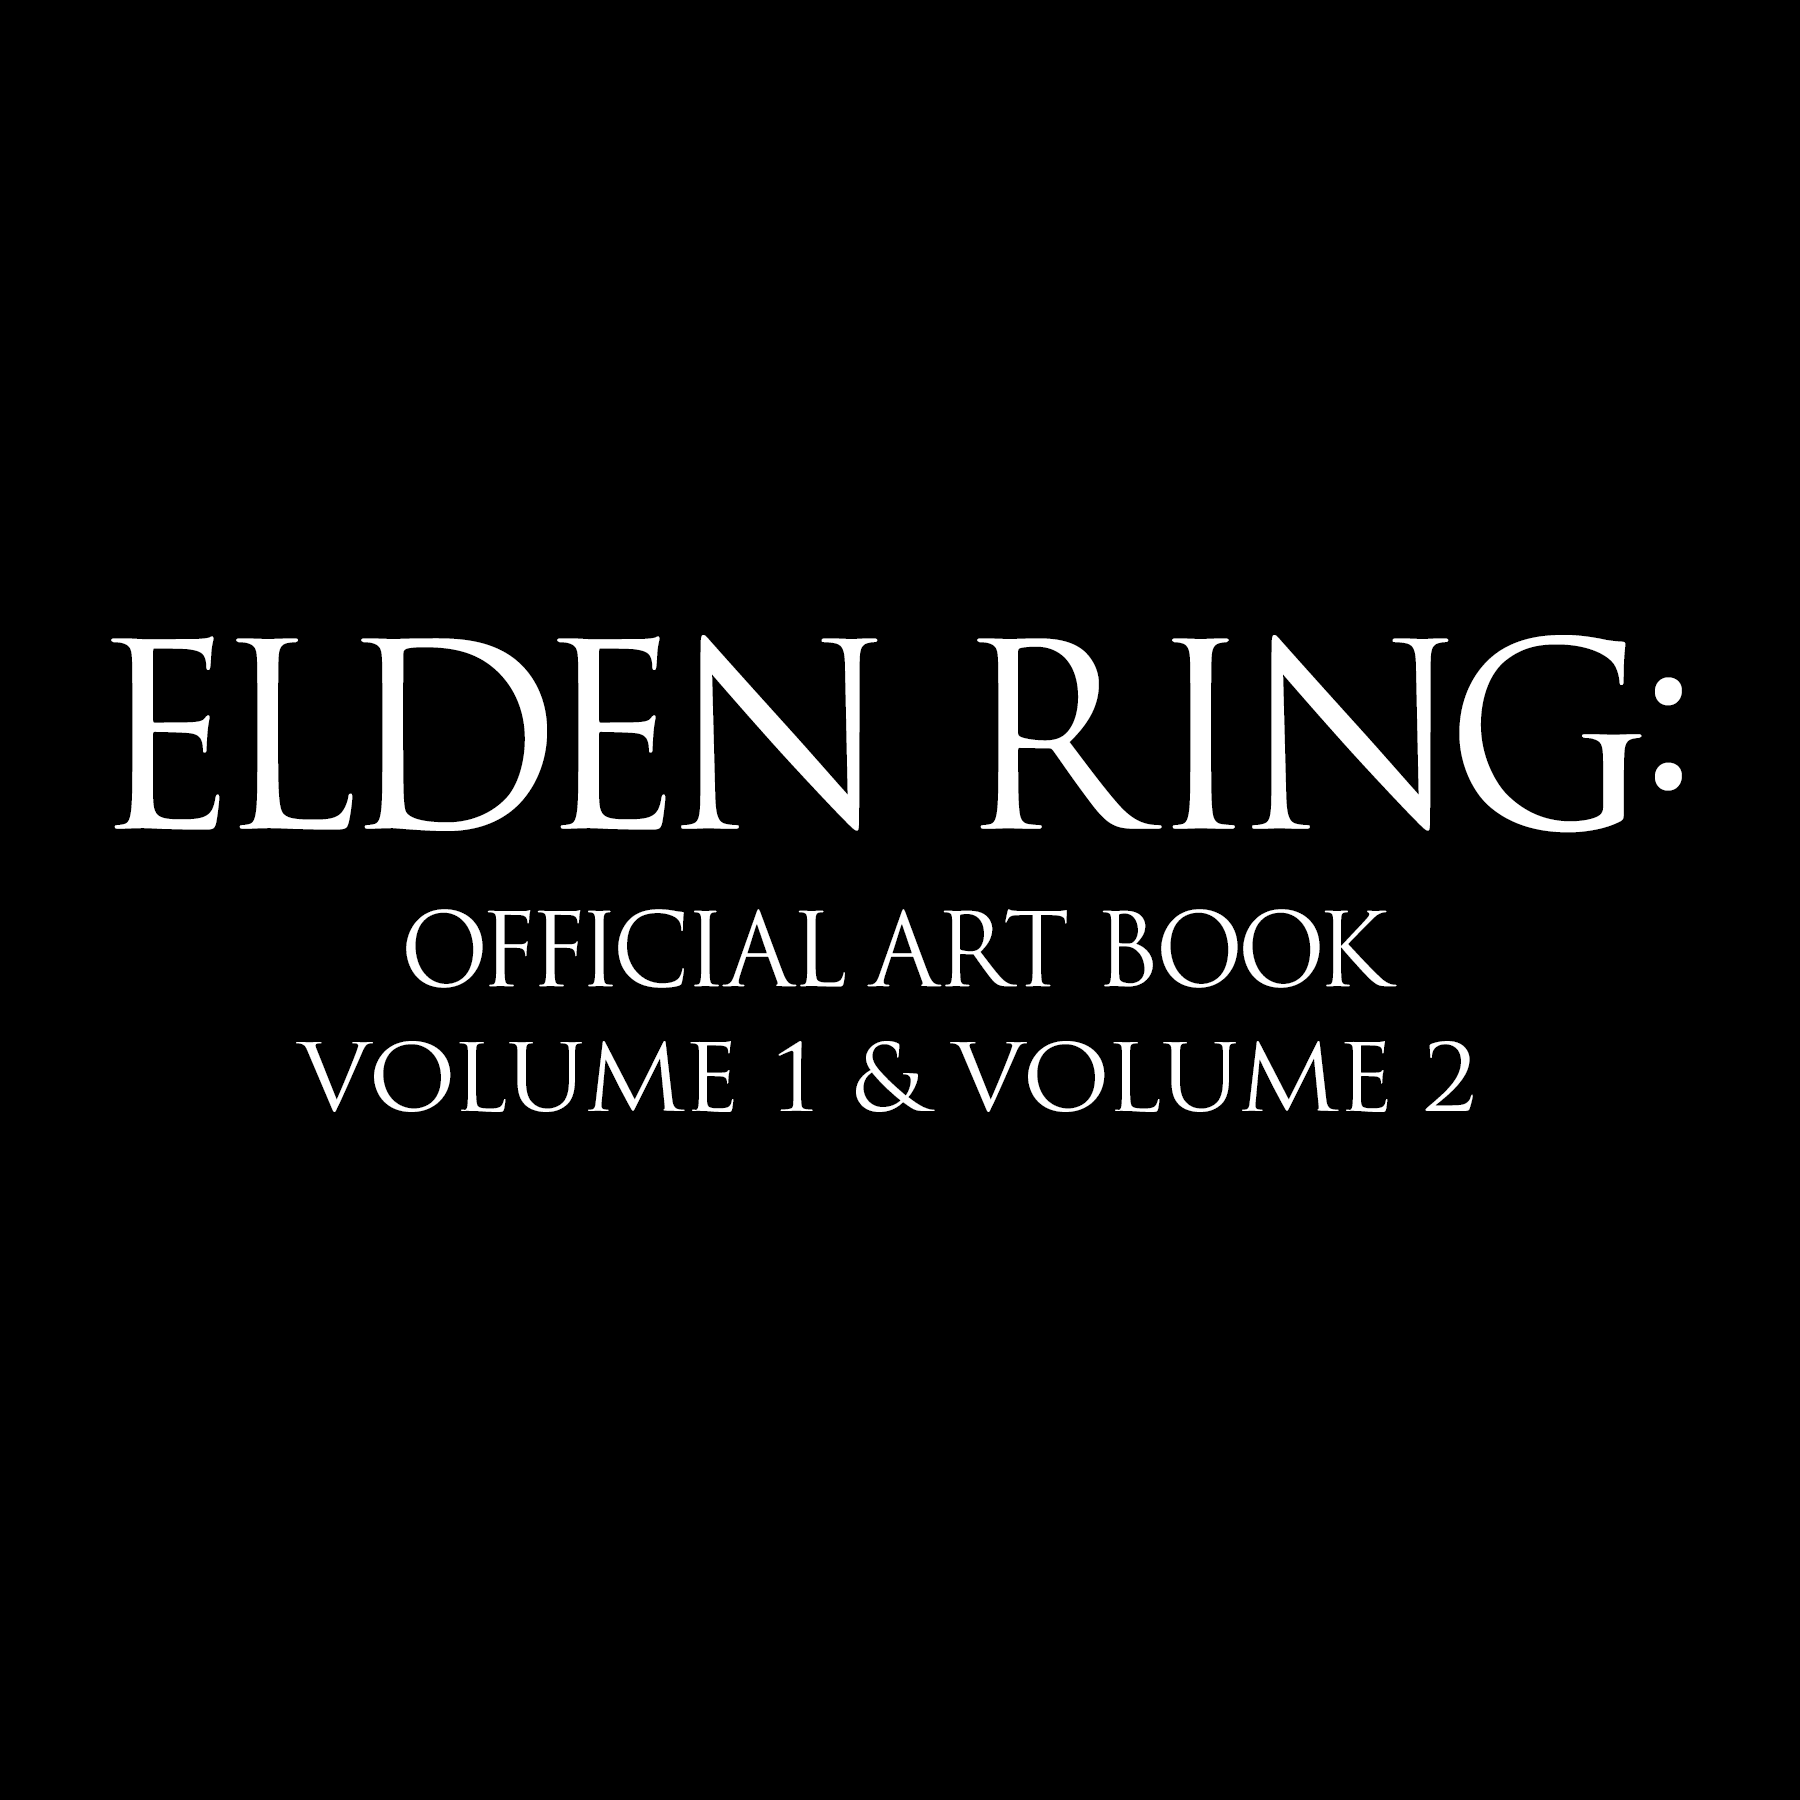 UDON Announces Elden Ring: Official Art Book Volumes 1 & 2 